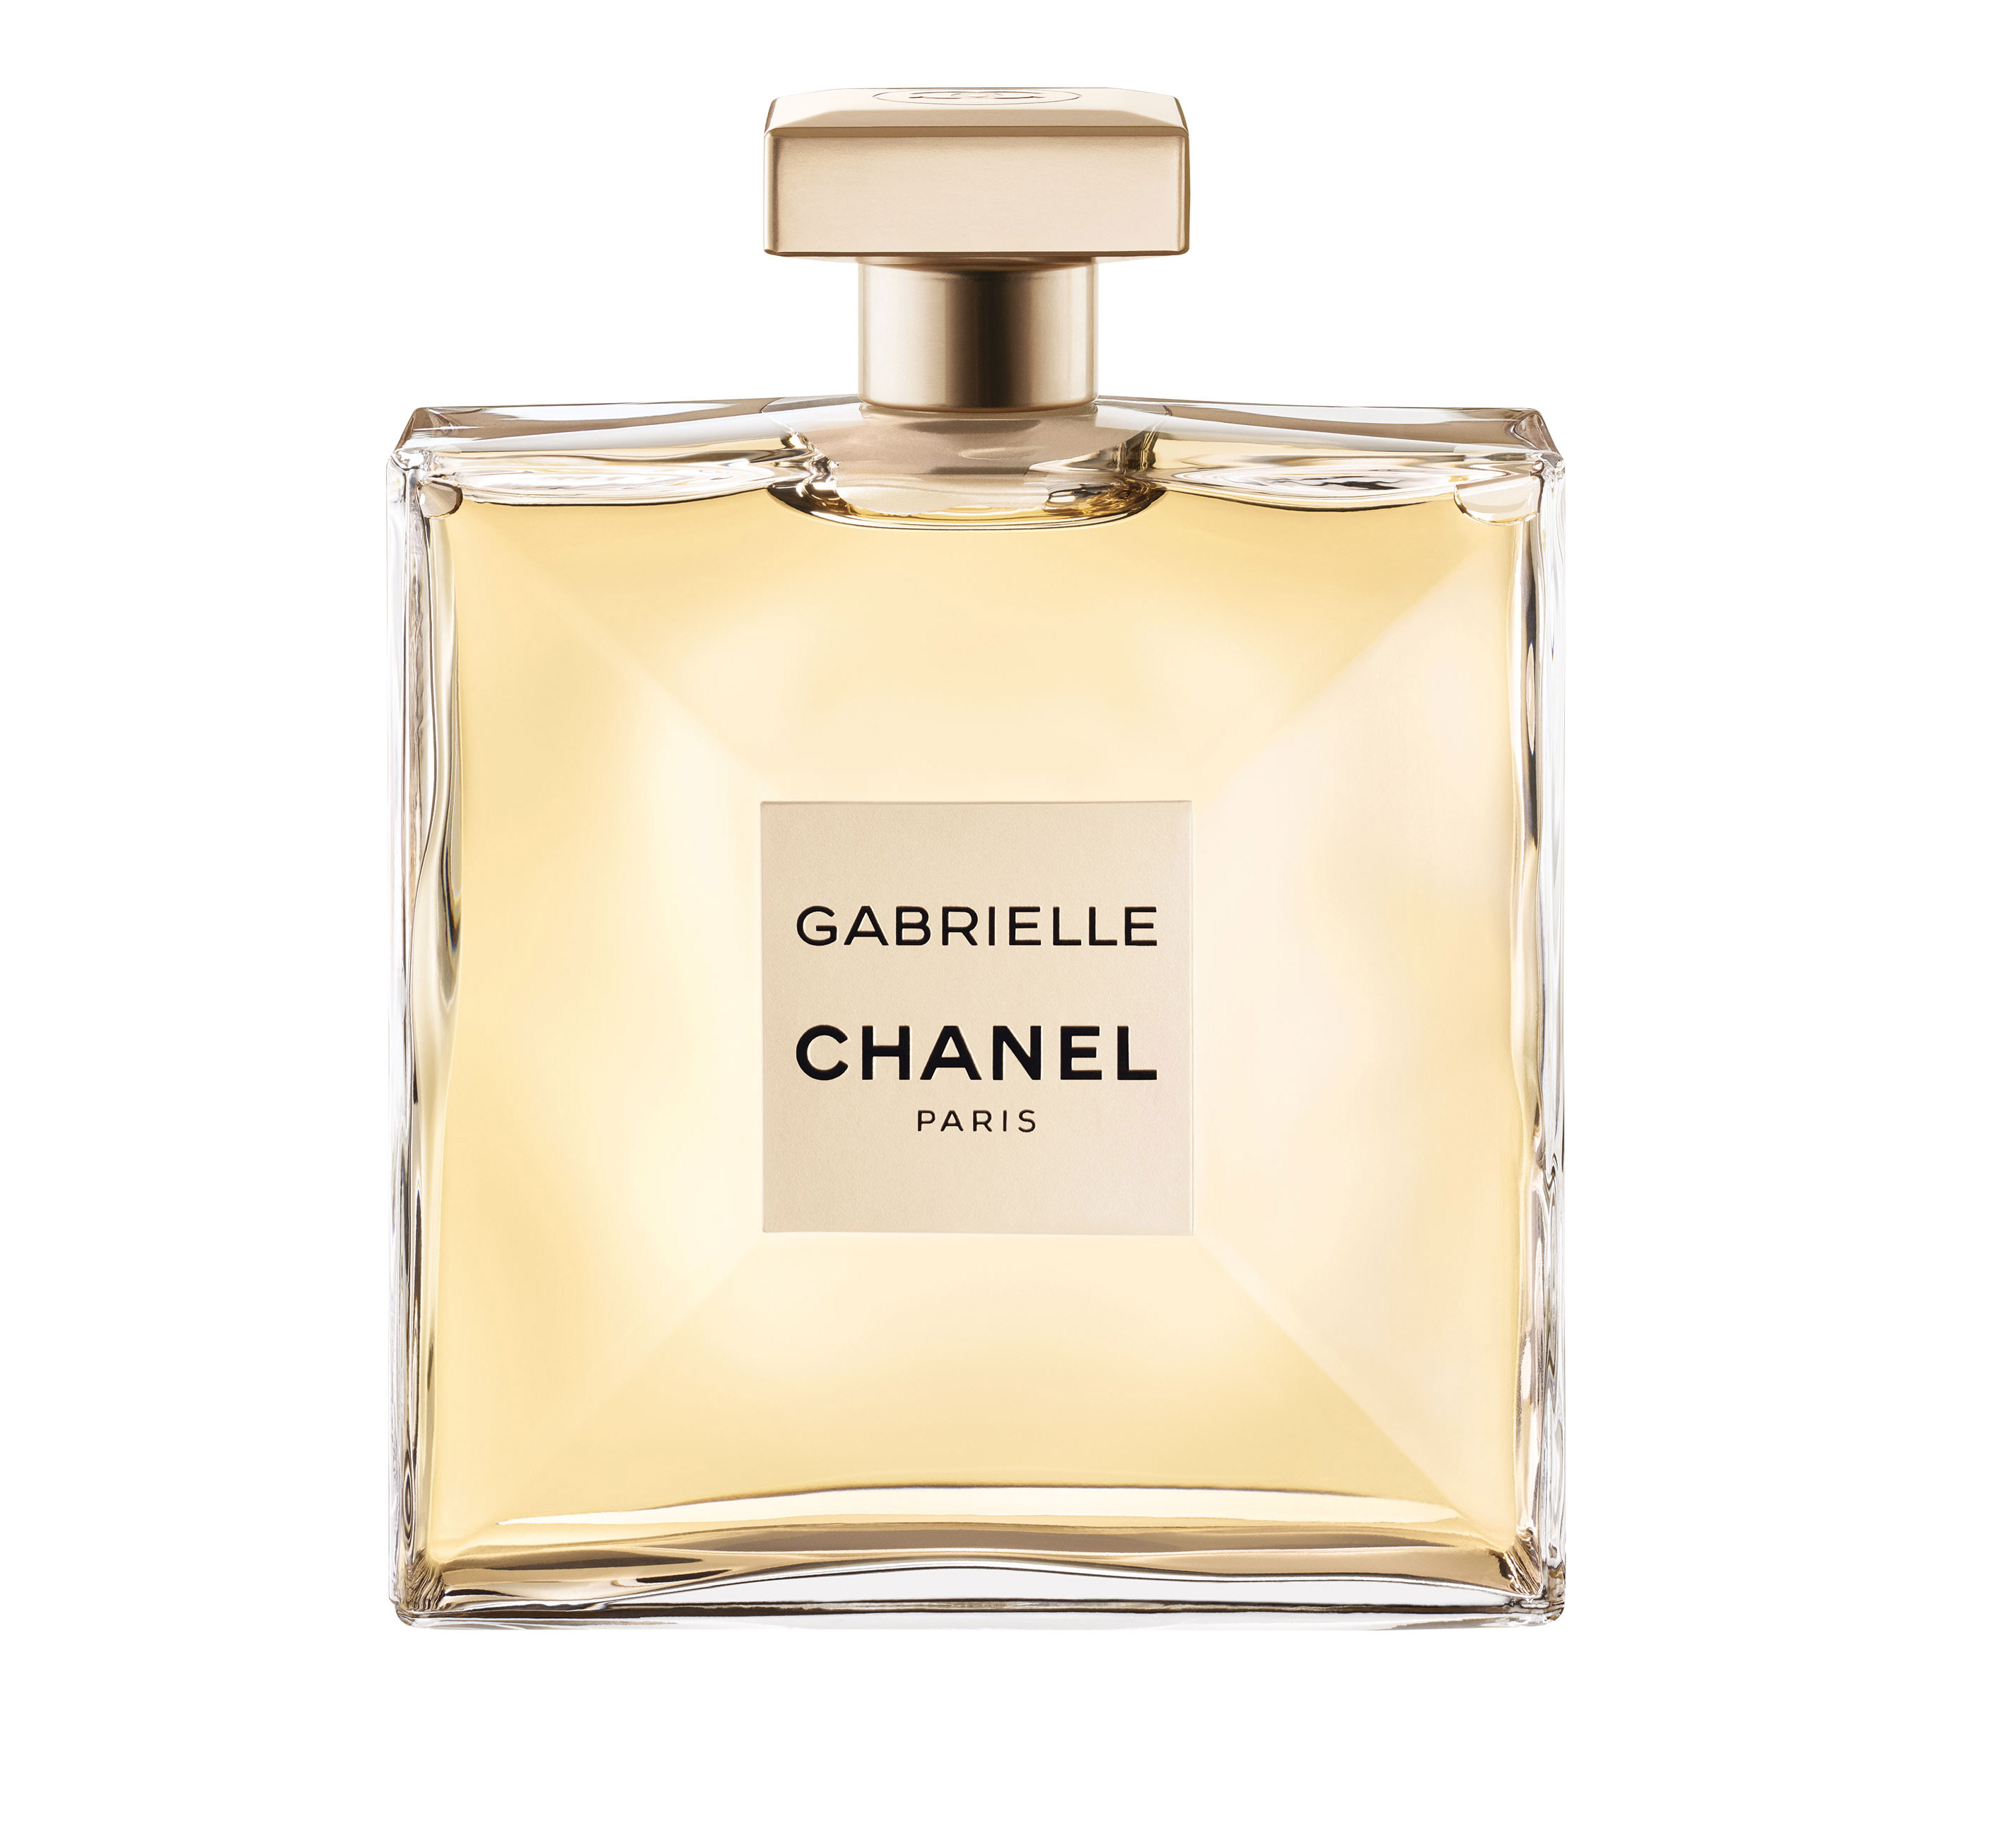 Kristen Stewart Stars In Chanel’s New Perfume Video - A&E Magazine